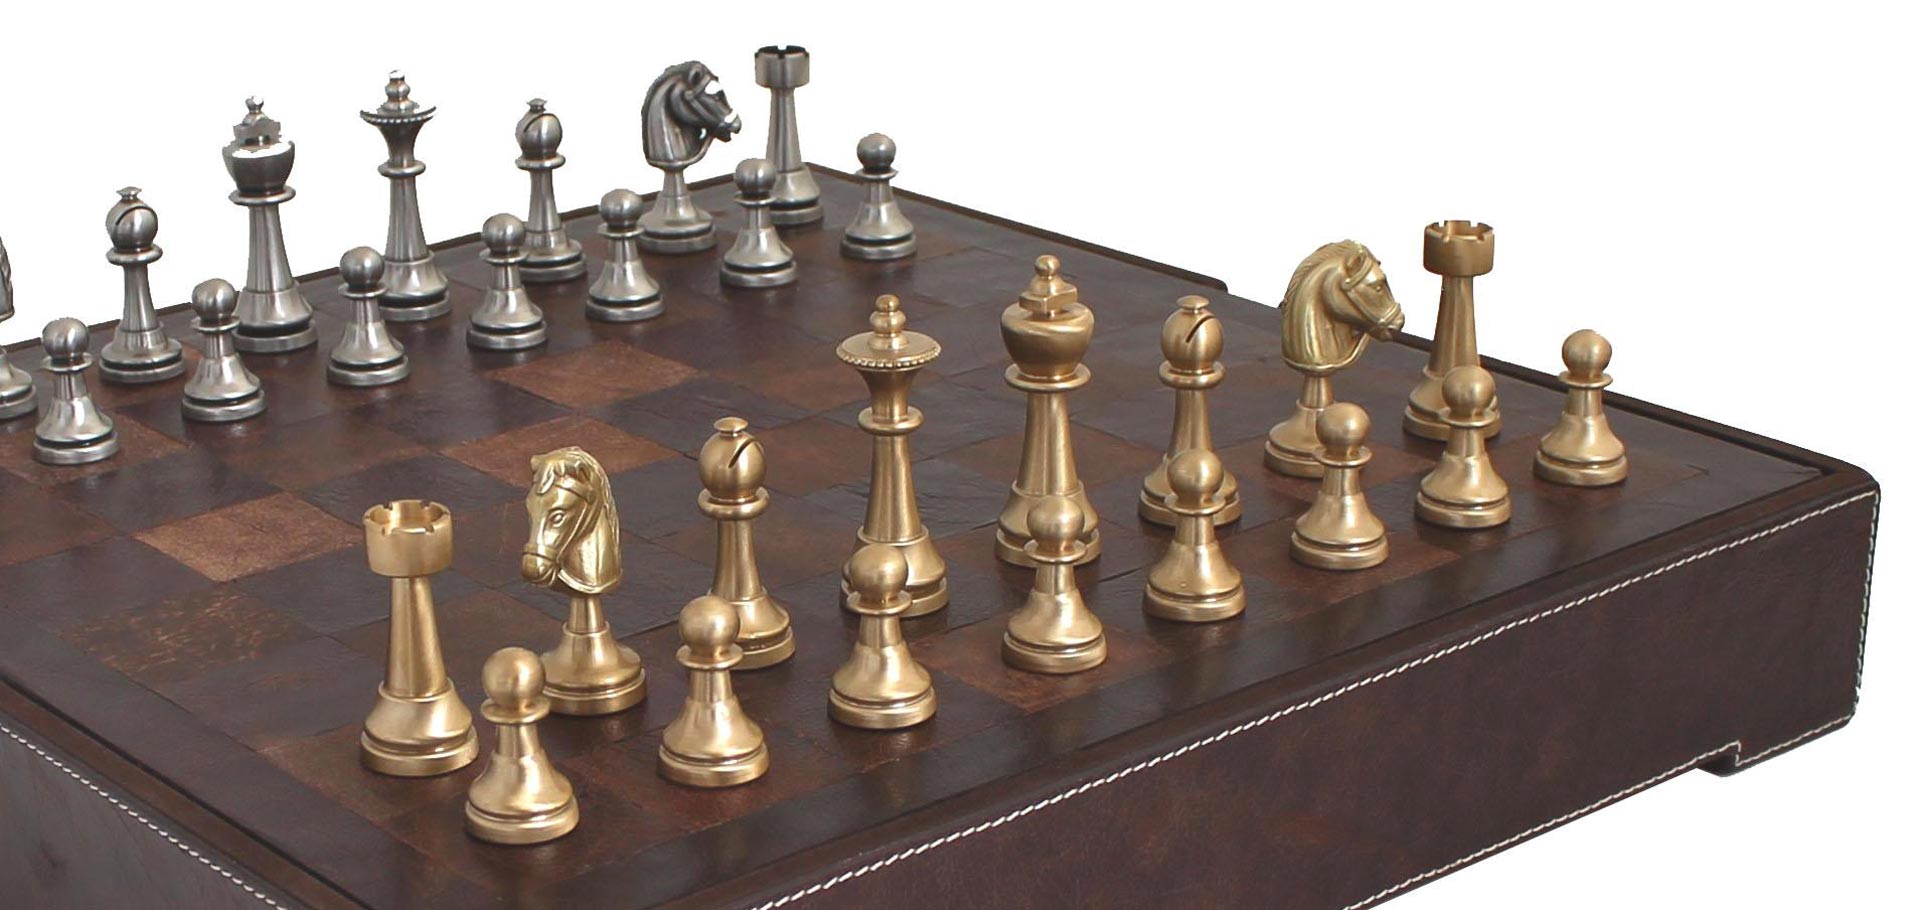 3 in 1 Schachspiel Geschenk Schach Sehr schones Holz klappbares 24cm x 24cm DE 